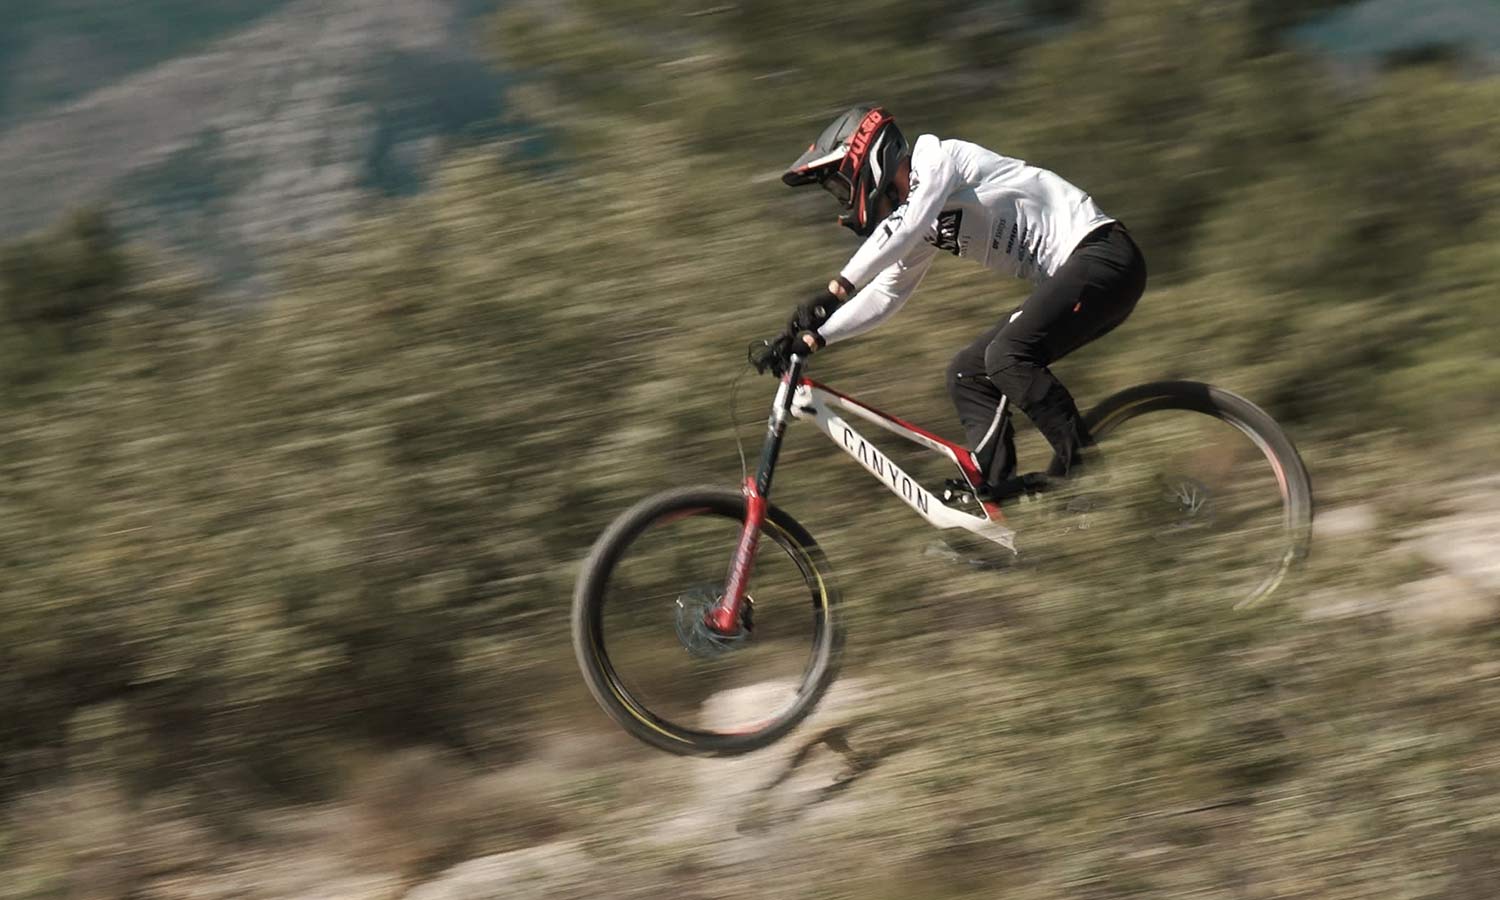 Pirelli Scorpion Gravity Racing prototype EWS, DH-ready mountain bike tires, photos by Julien Pradas, riding